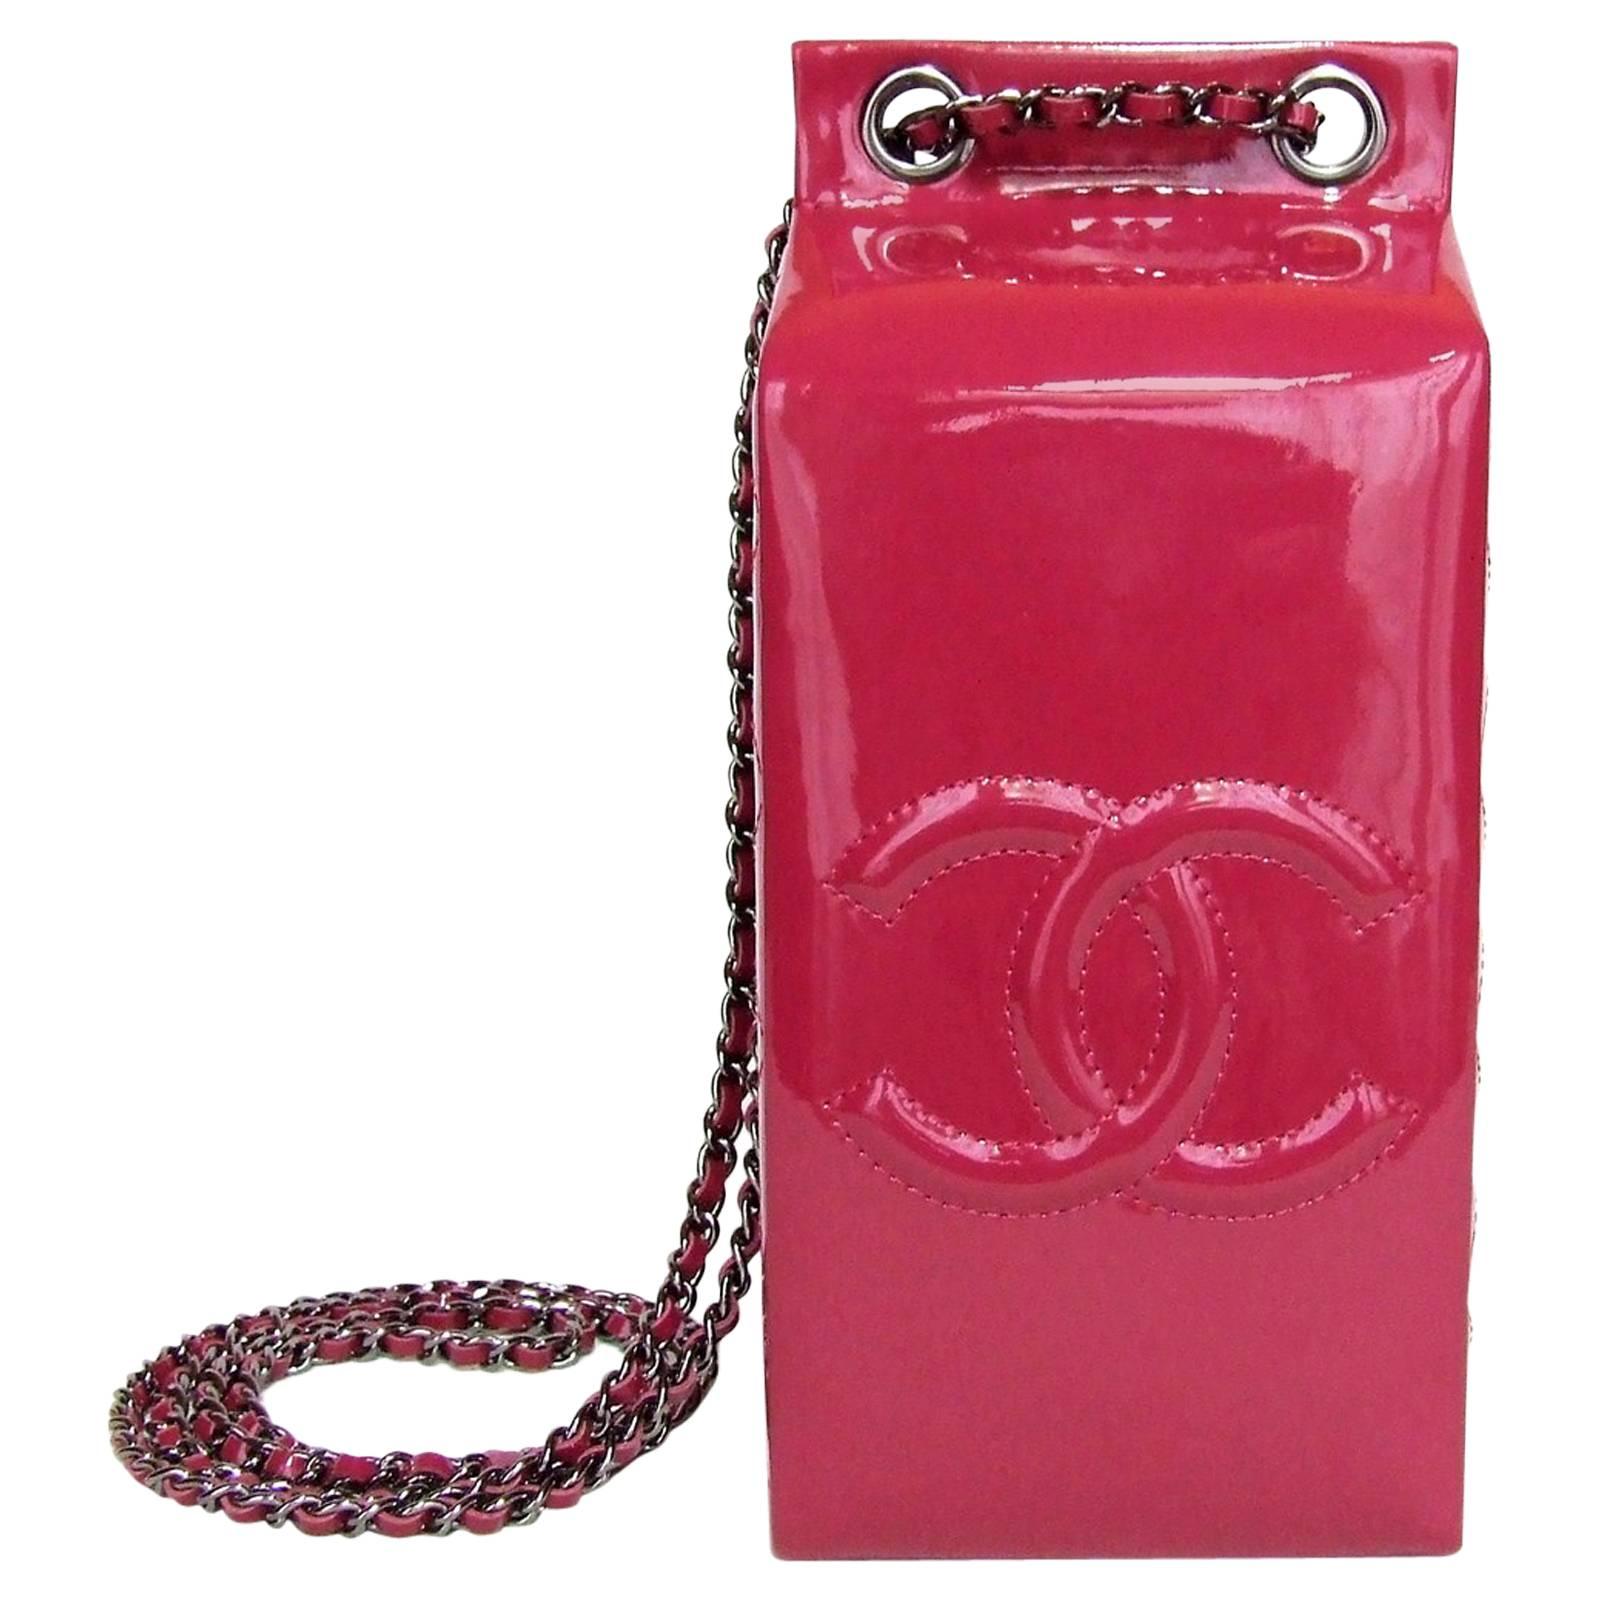 CHANEL Milk Bottle Bag Pink Patent Leather Limited Edition Full Set